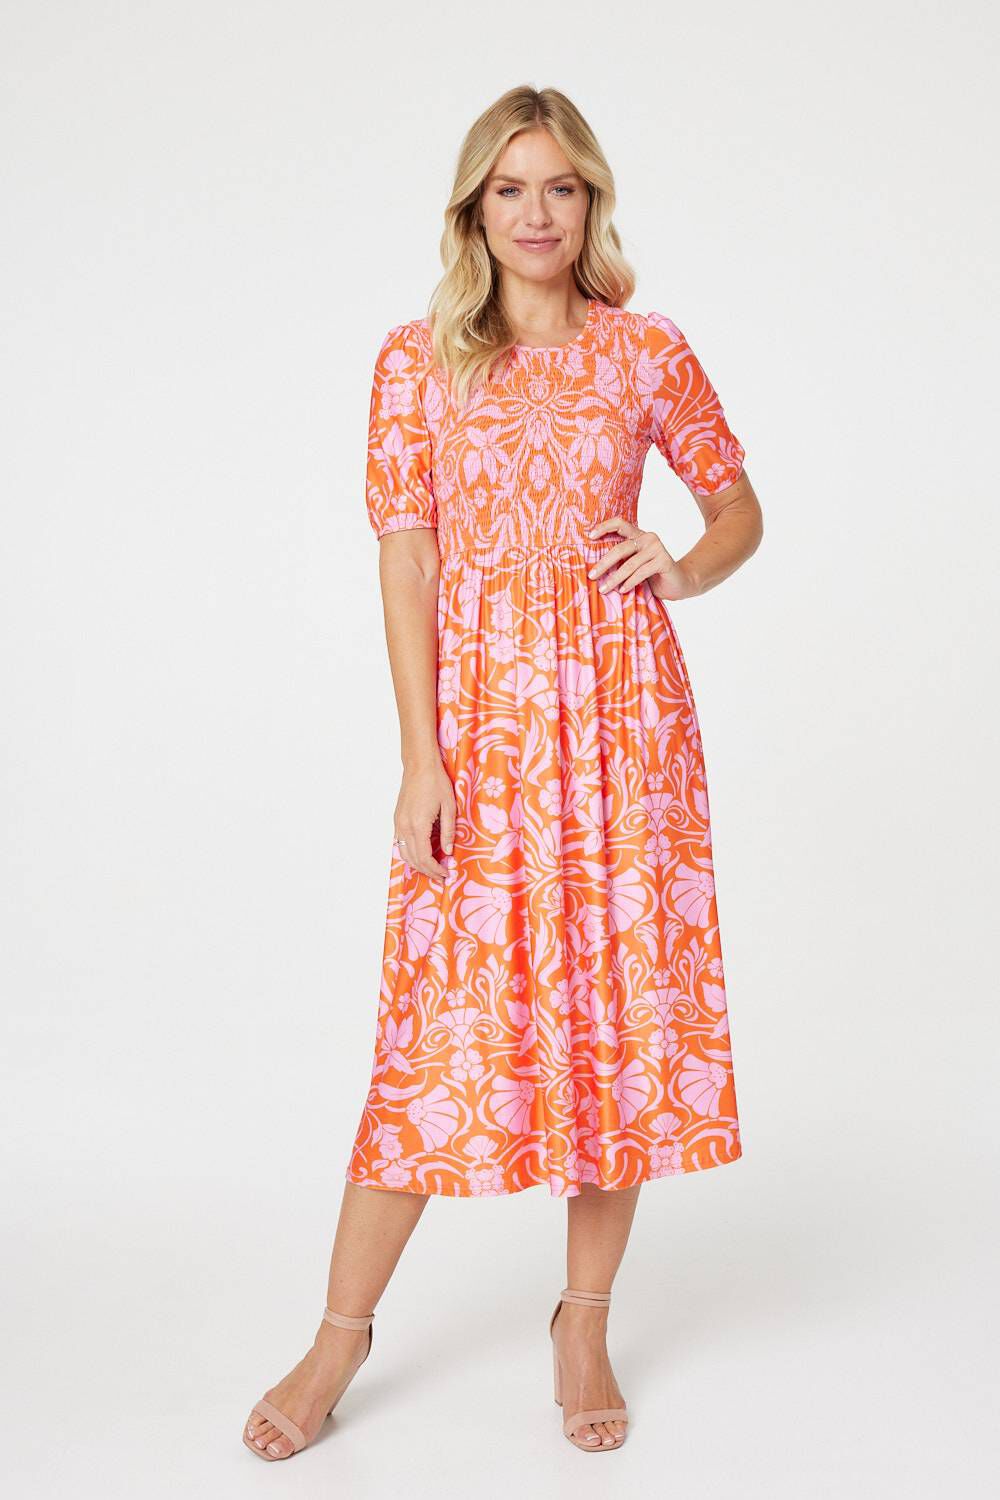 Izabel London Orange - Floral Smocked Detail Midi Dress, Size: XL